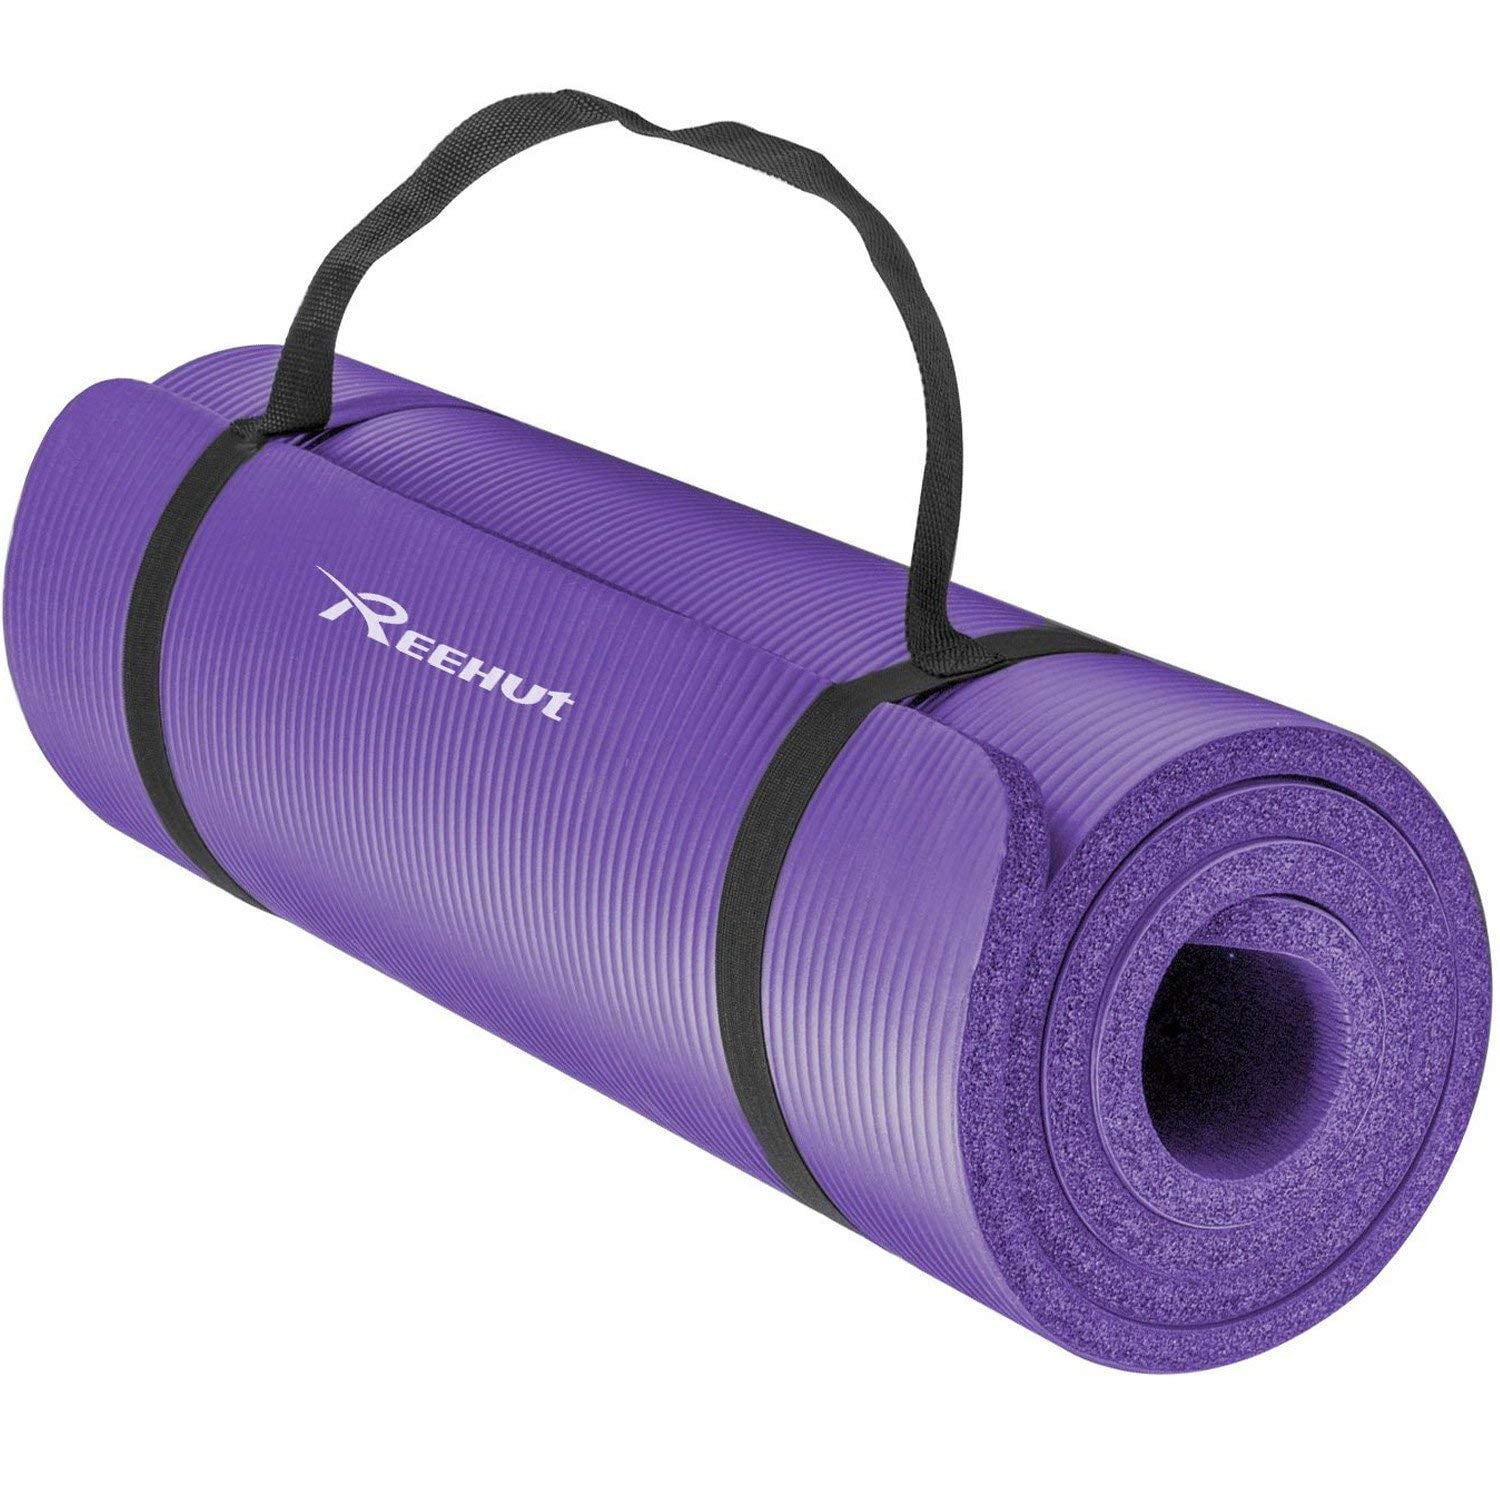 Yoga Mat Starter Kit Block Sling Strap 3mm Thick Pilates Fitness Gym Blue  Myga 5029476008896